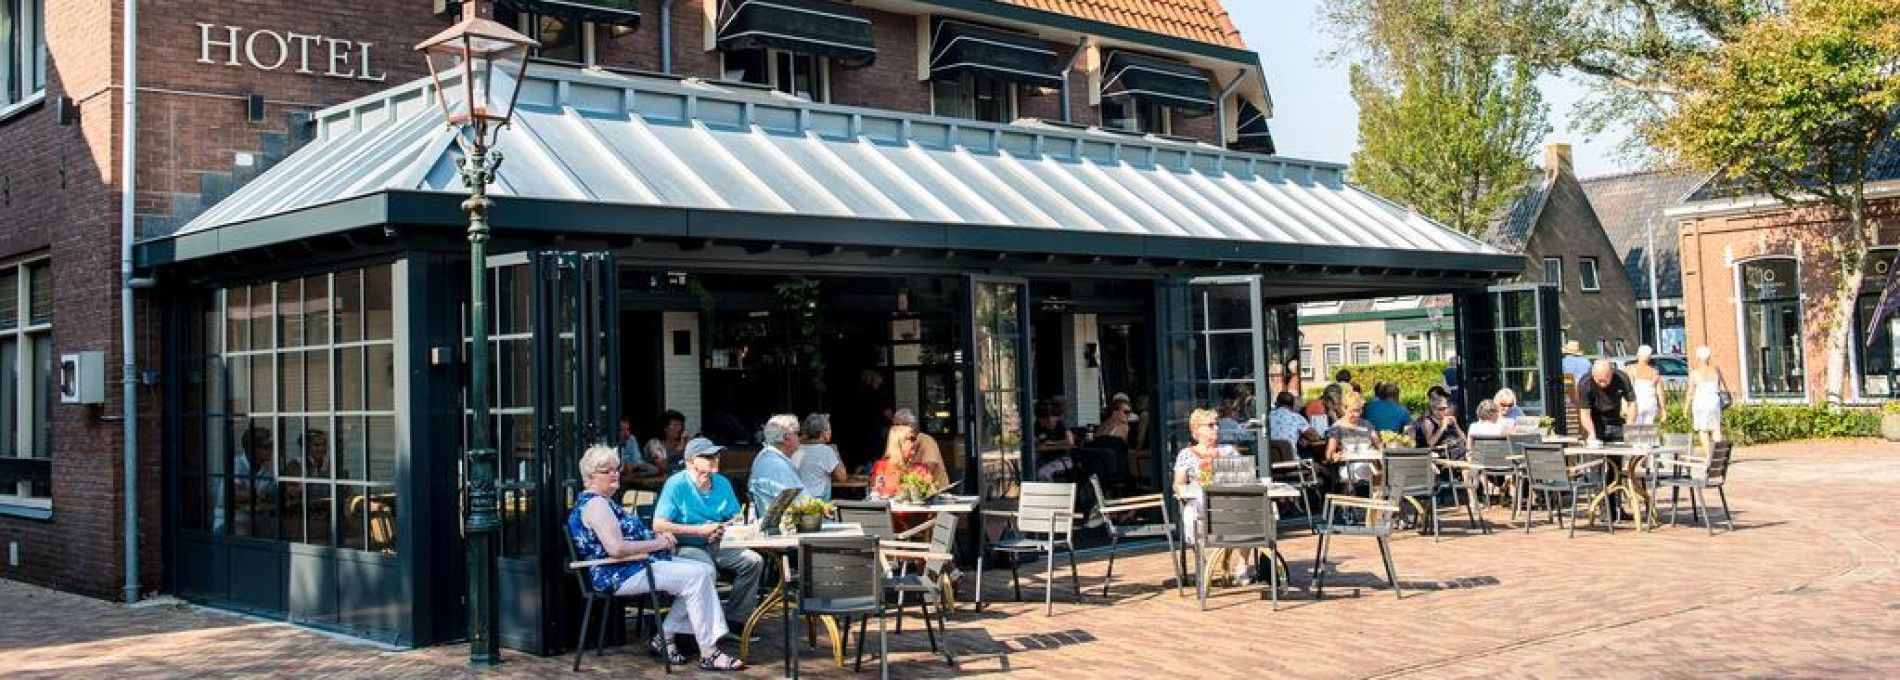 Hotel-Restaurant de Jong - VVV Ameland